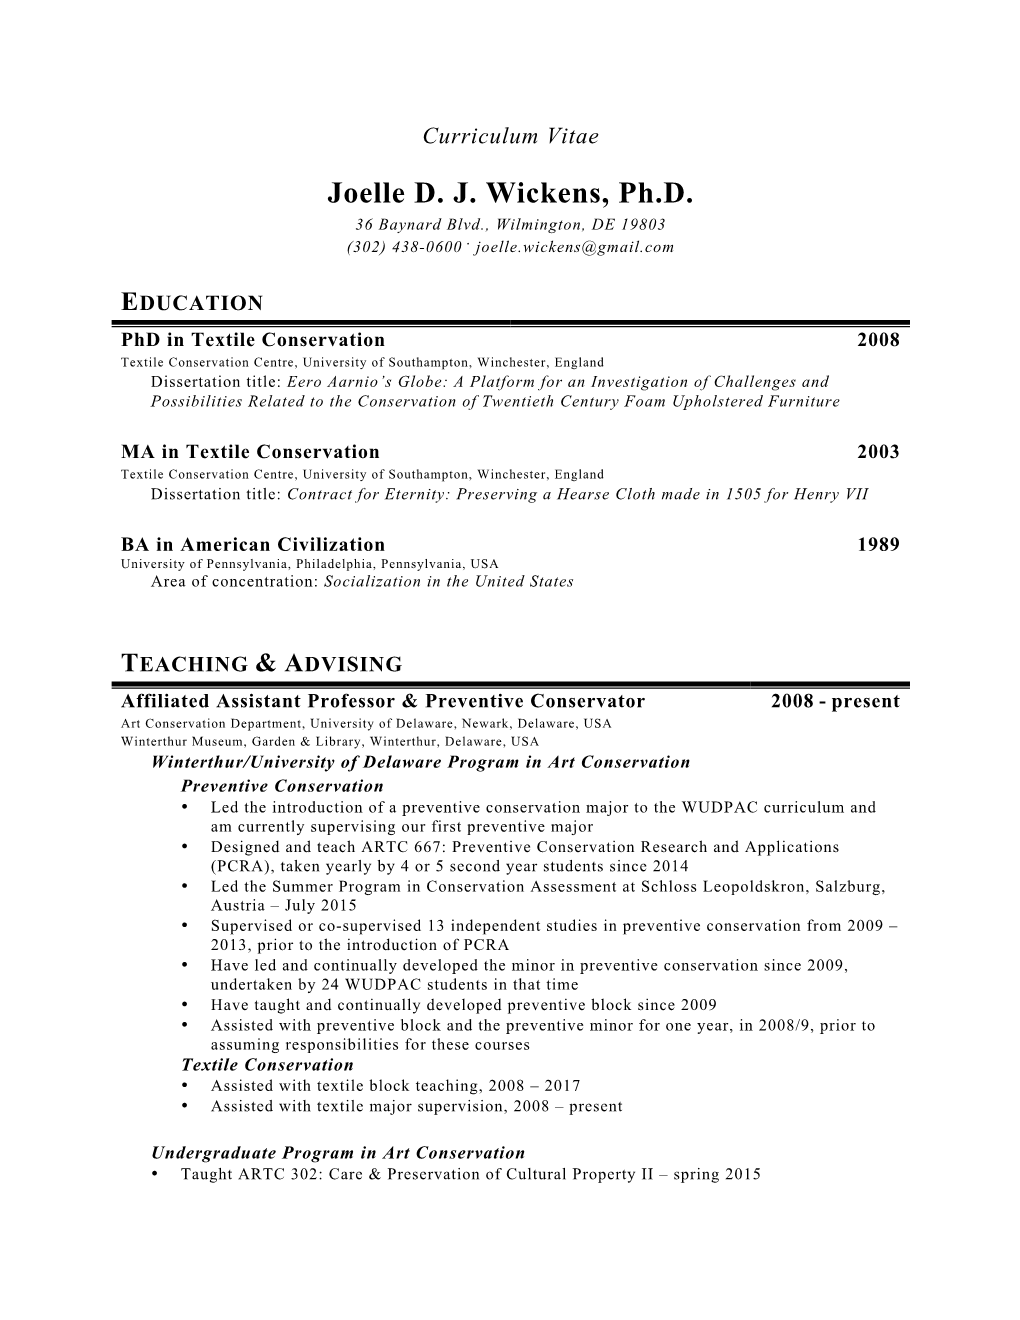 Joelle D. J. Wickens, Ph.D. 36 Baynard Blvd., Wilmington, DE 19803 (302) 438-0600